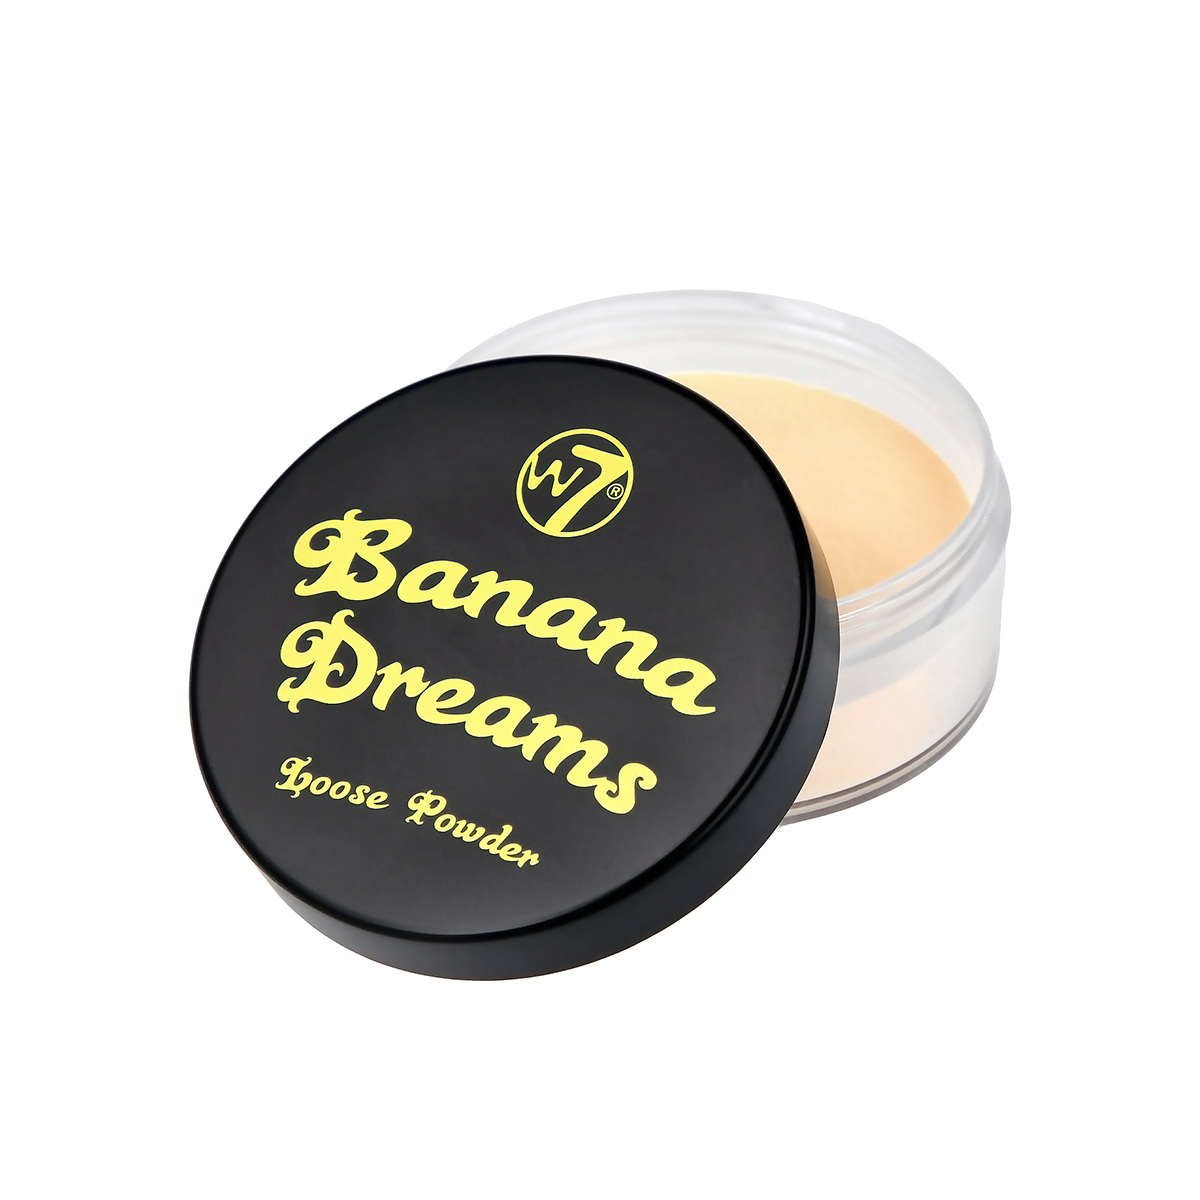 W7 Banana Dreams Loose Powder 20g – Rupchorcha- Buy Authentic Cosmetics